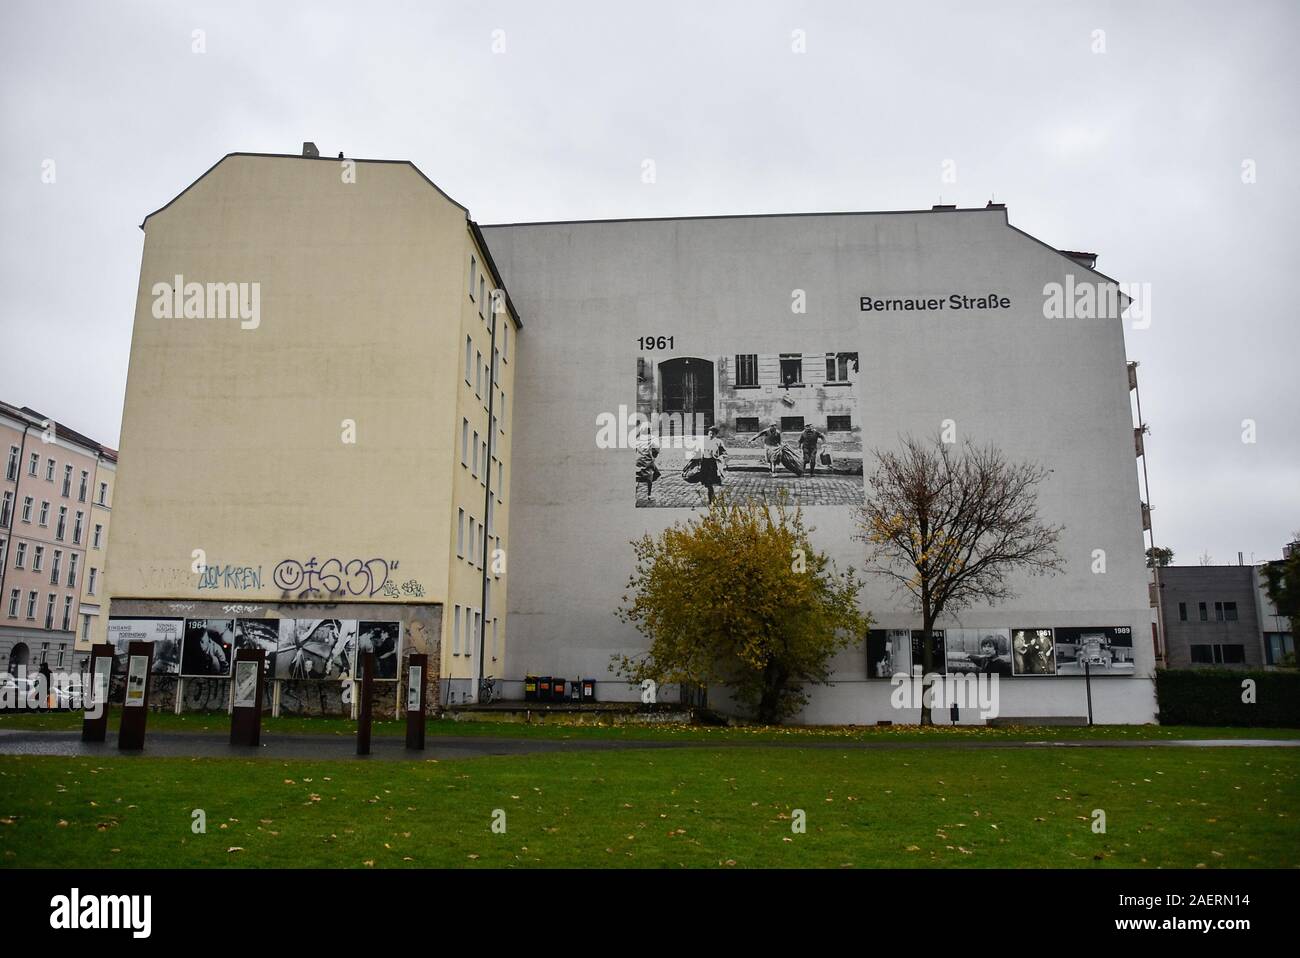 Berlin Wall memorial, Bernauer Strasse, Berlin-Mitte Stock Photo